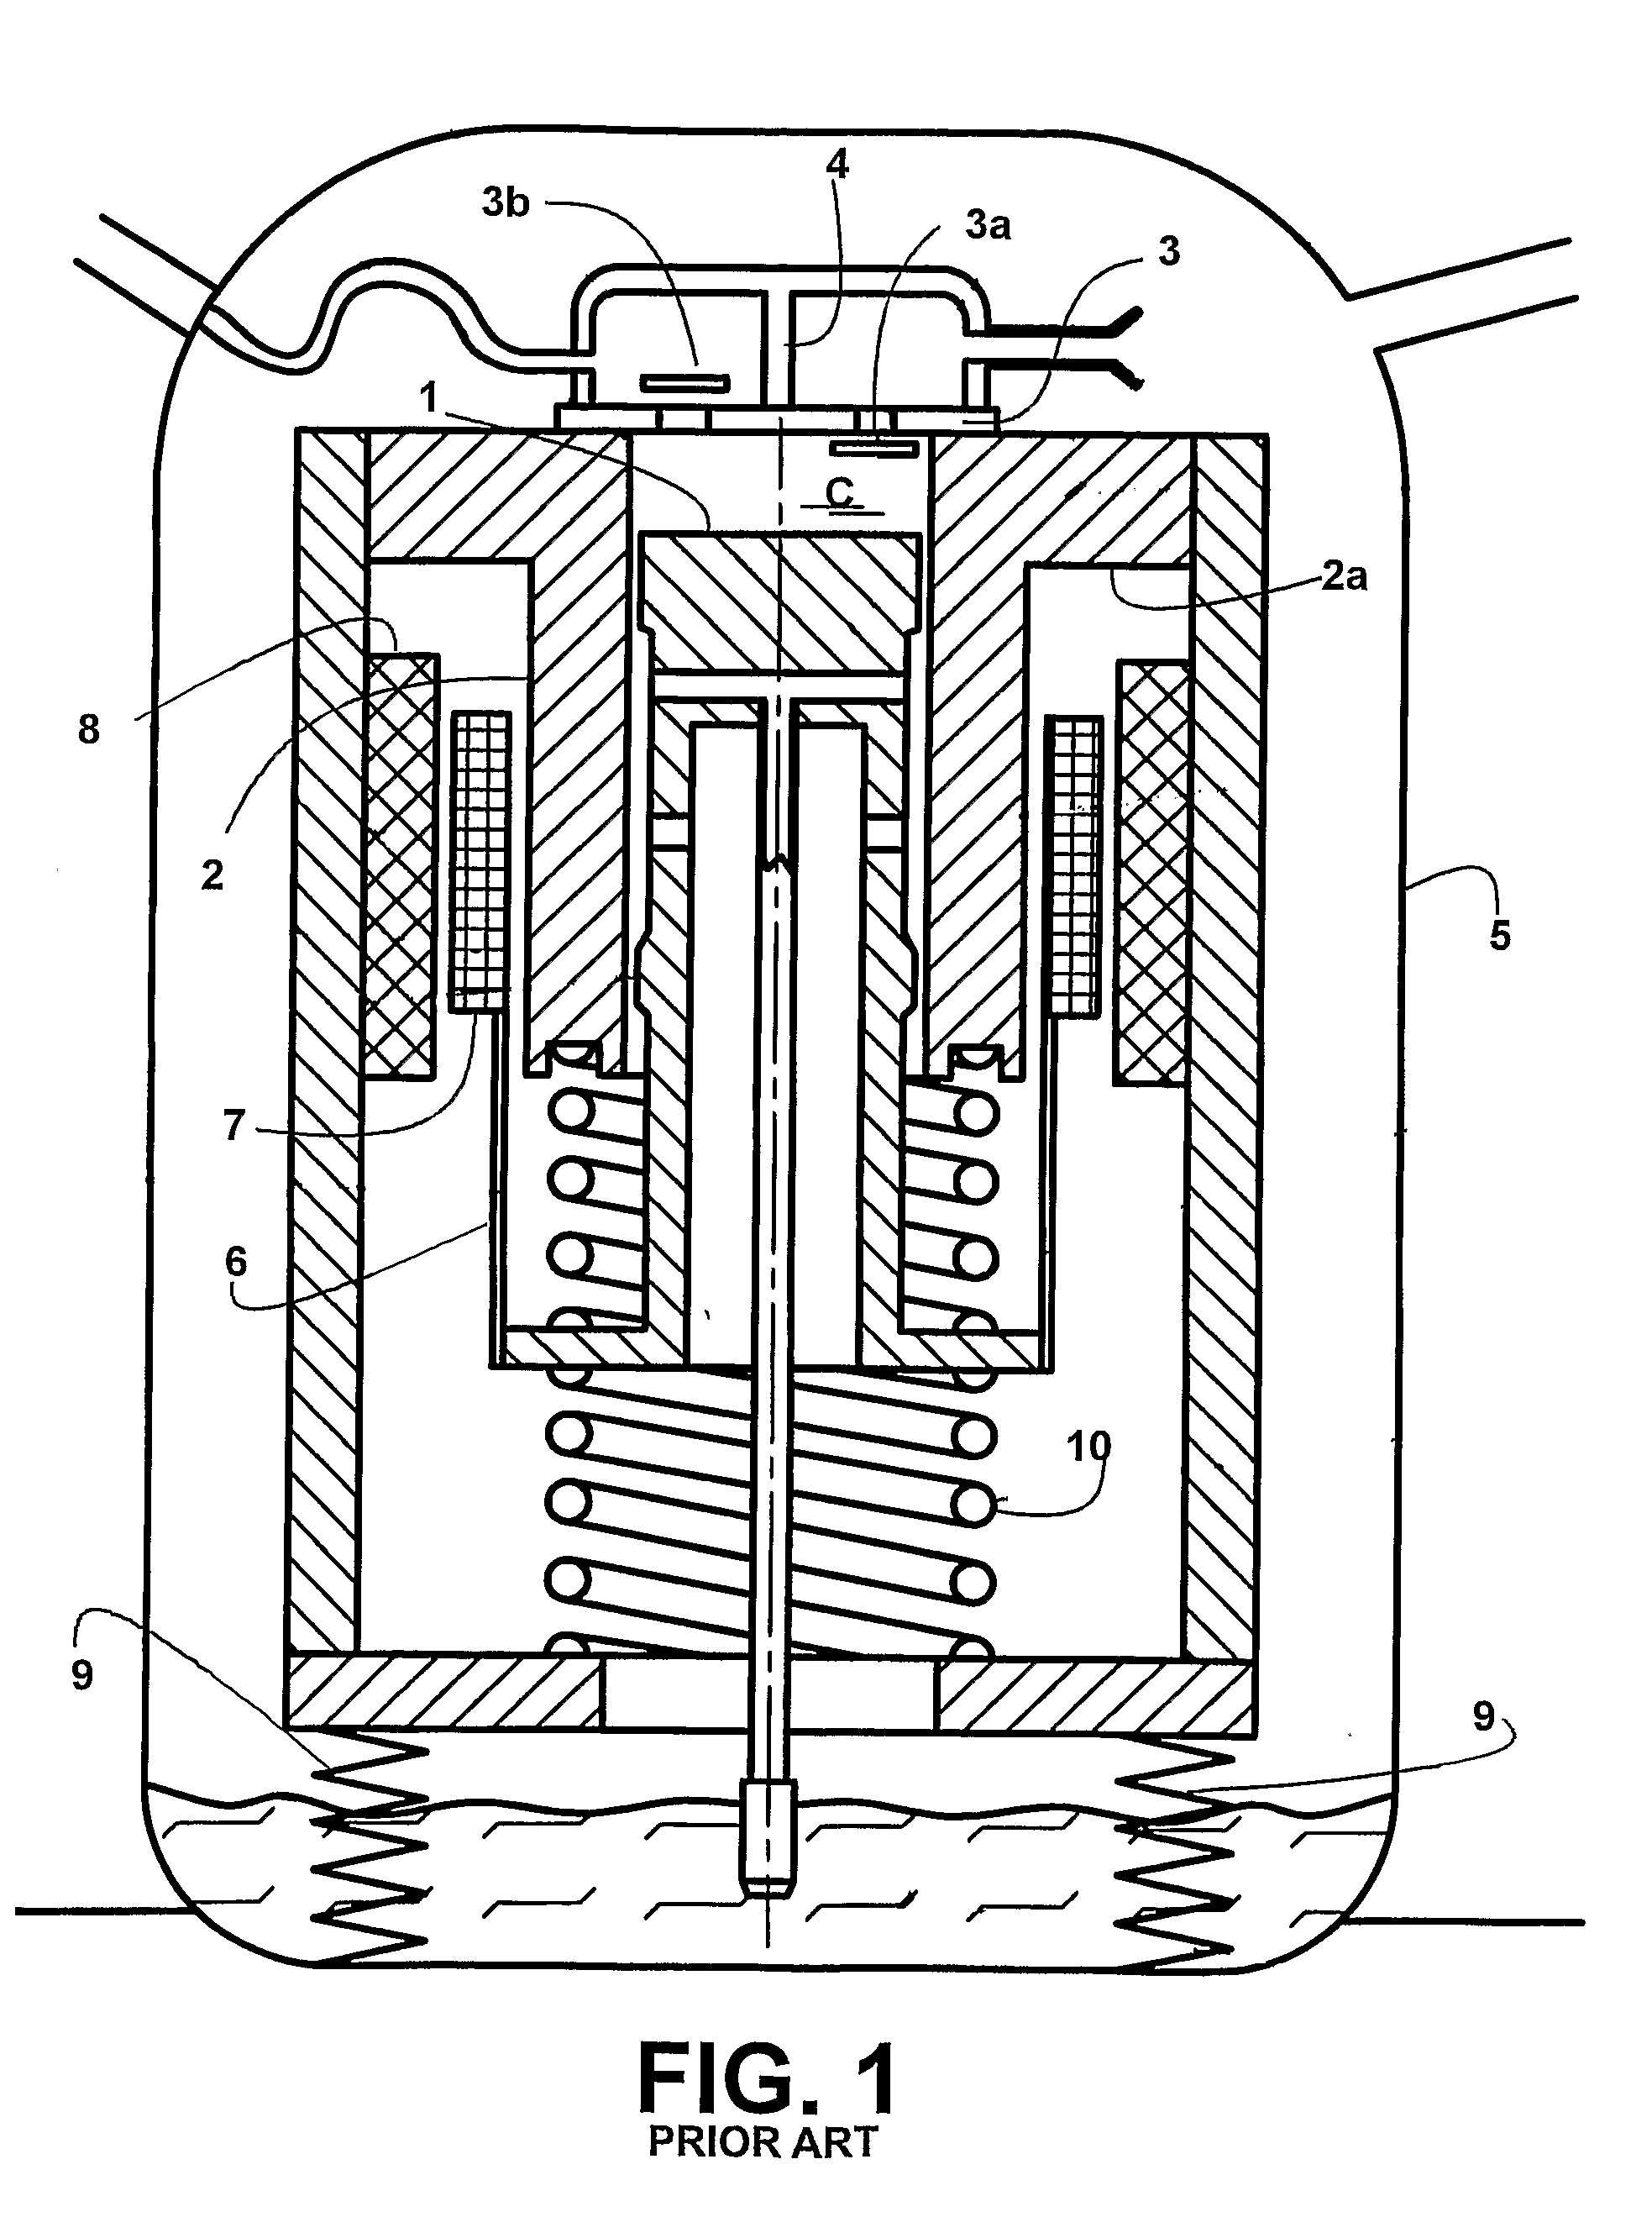 Linear compressor